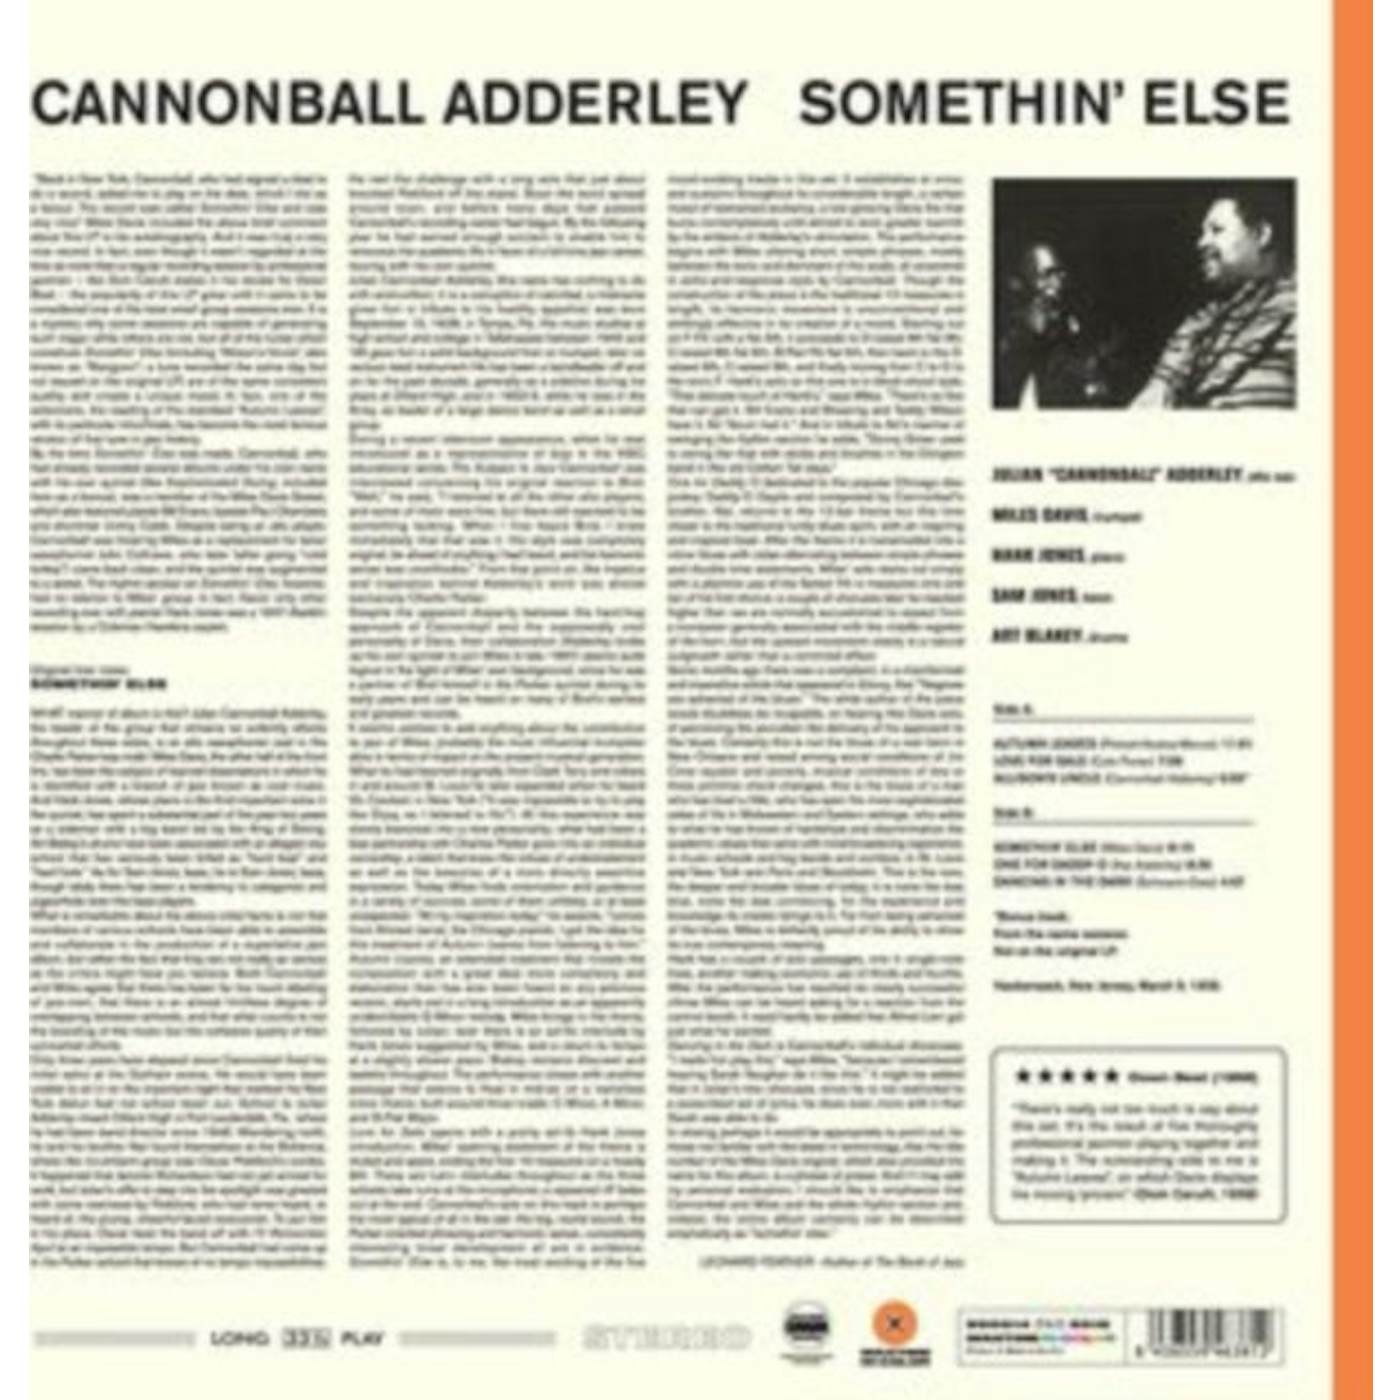 Cannonball Adderley LP Vinyl Record - Somethin' Else (Limited Solid Orange Vinyl)